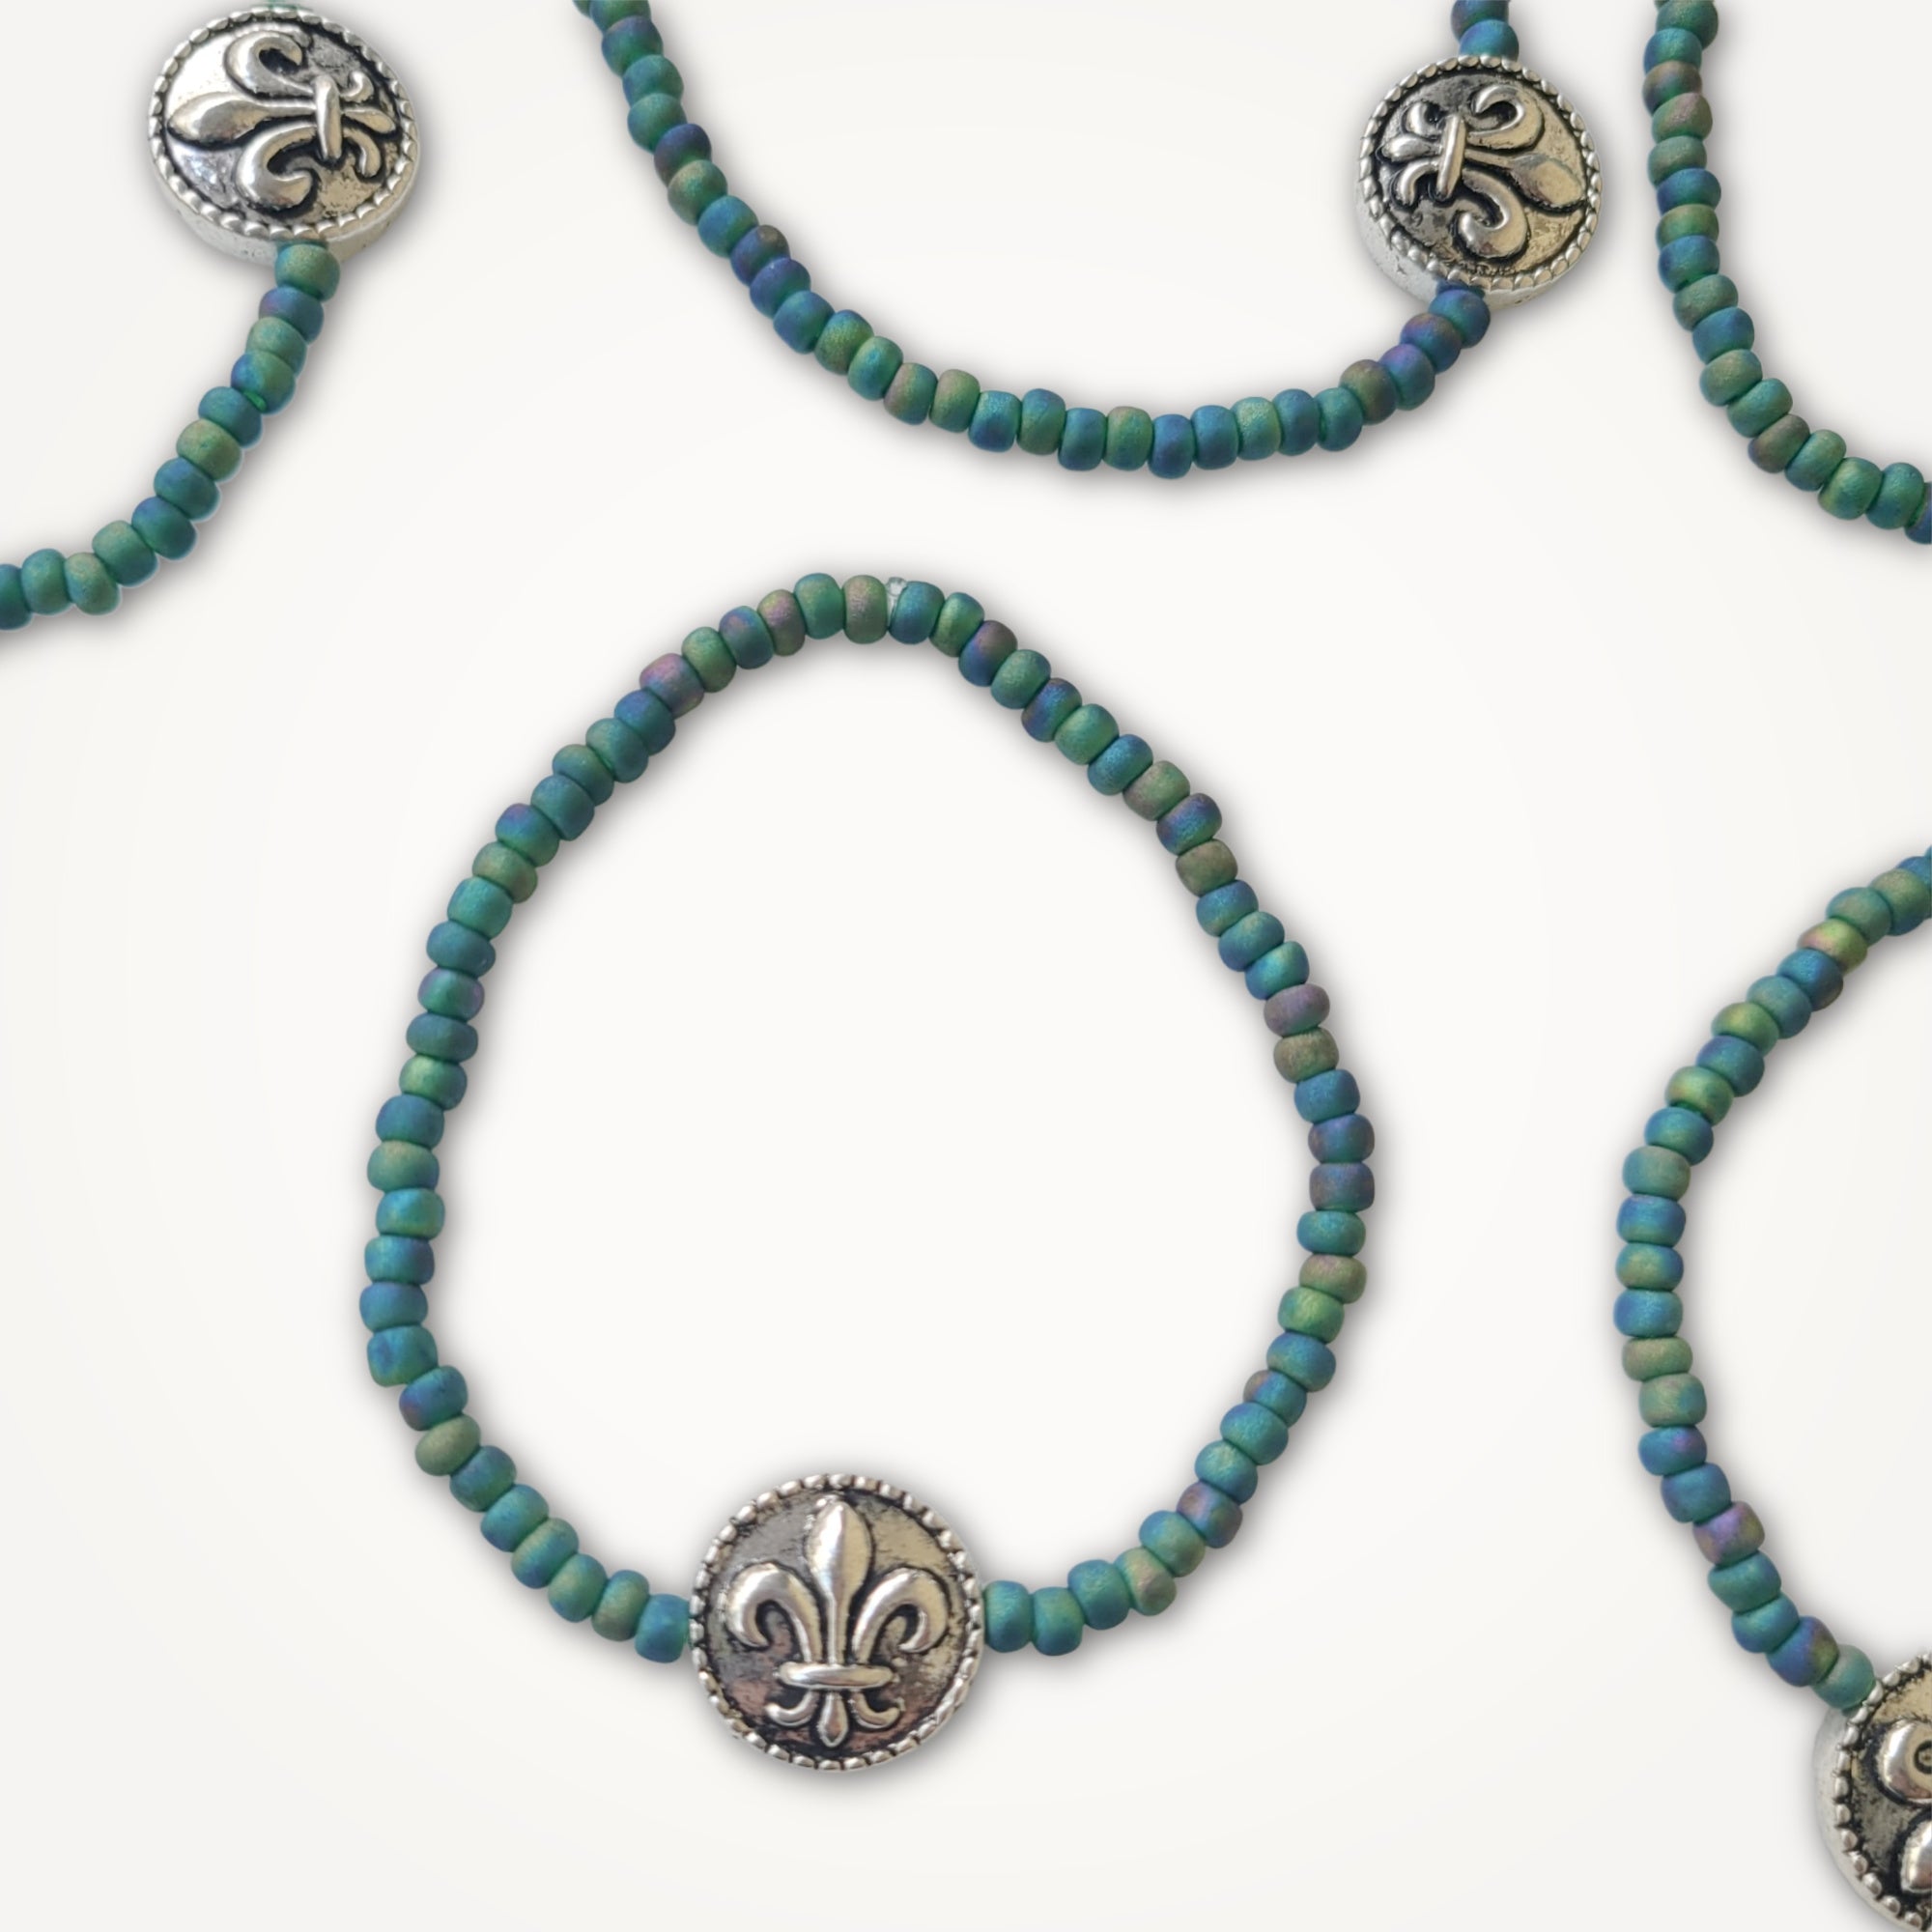 Men Bracelet, Materials: Howlite stones, Coral stones, Tibetan silver beads  | Bracelets for men, Tibetan silver beads, Coral stone